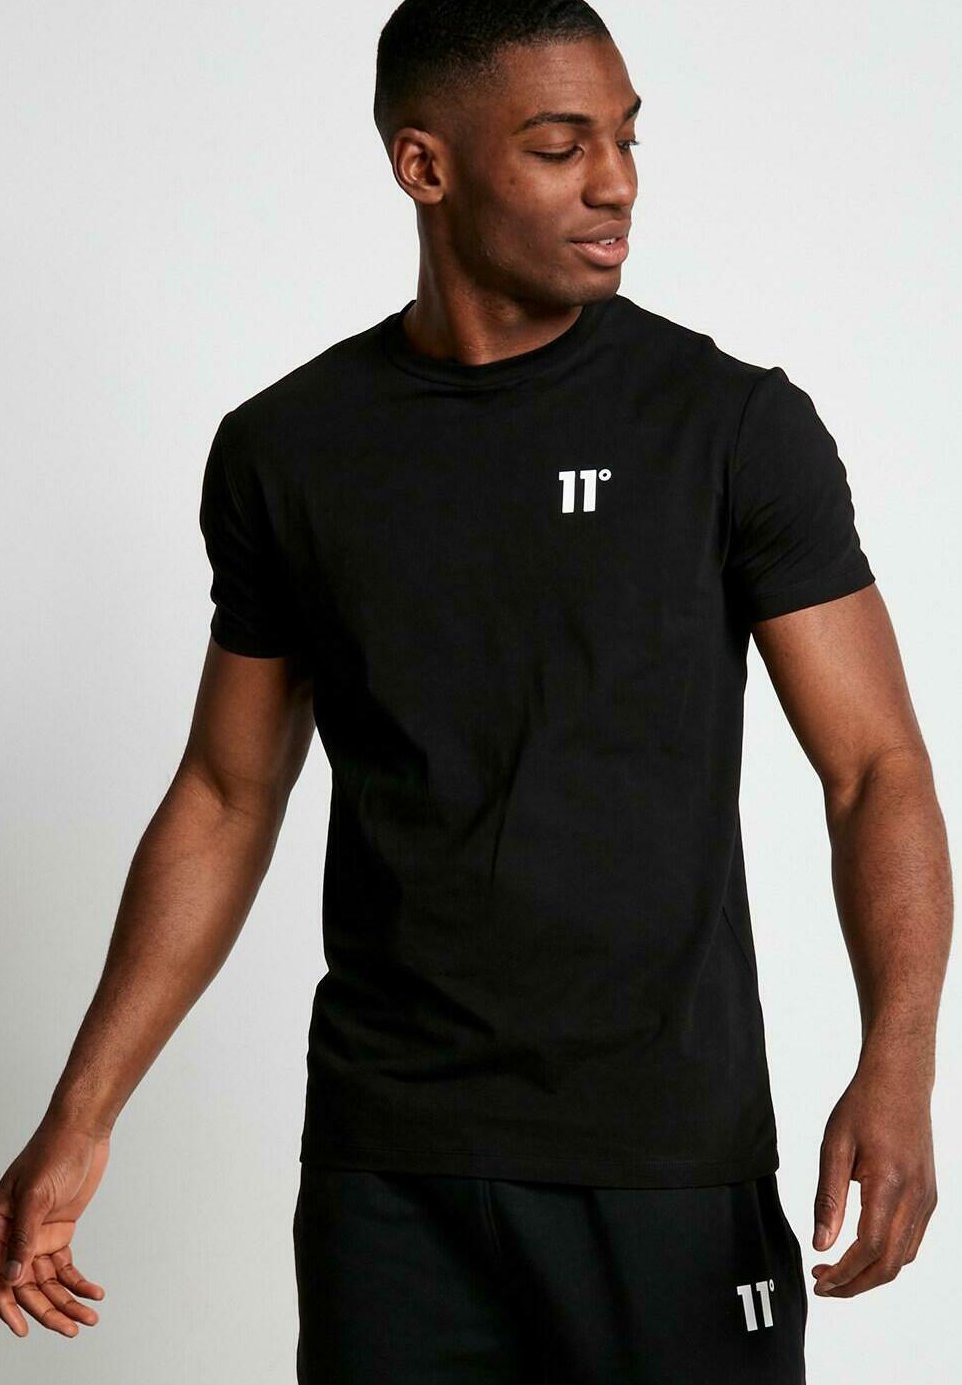 Базовая футболка CORE MUSCLE FIT 11 DEGREES, черный